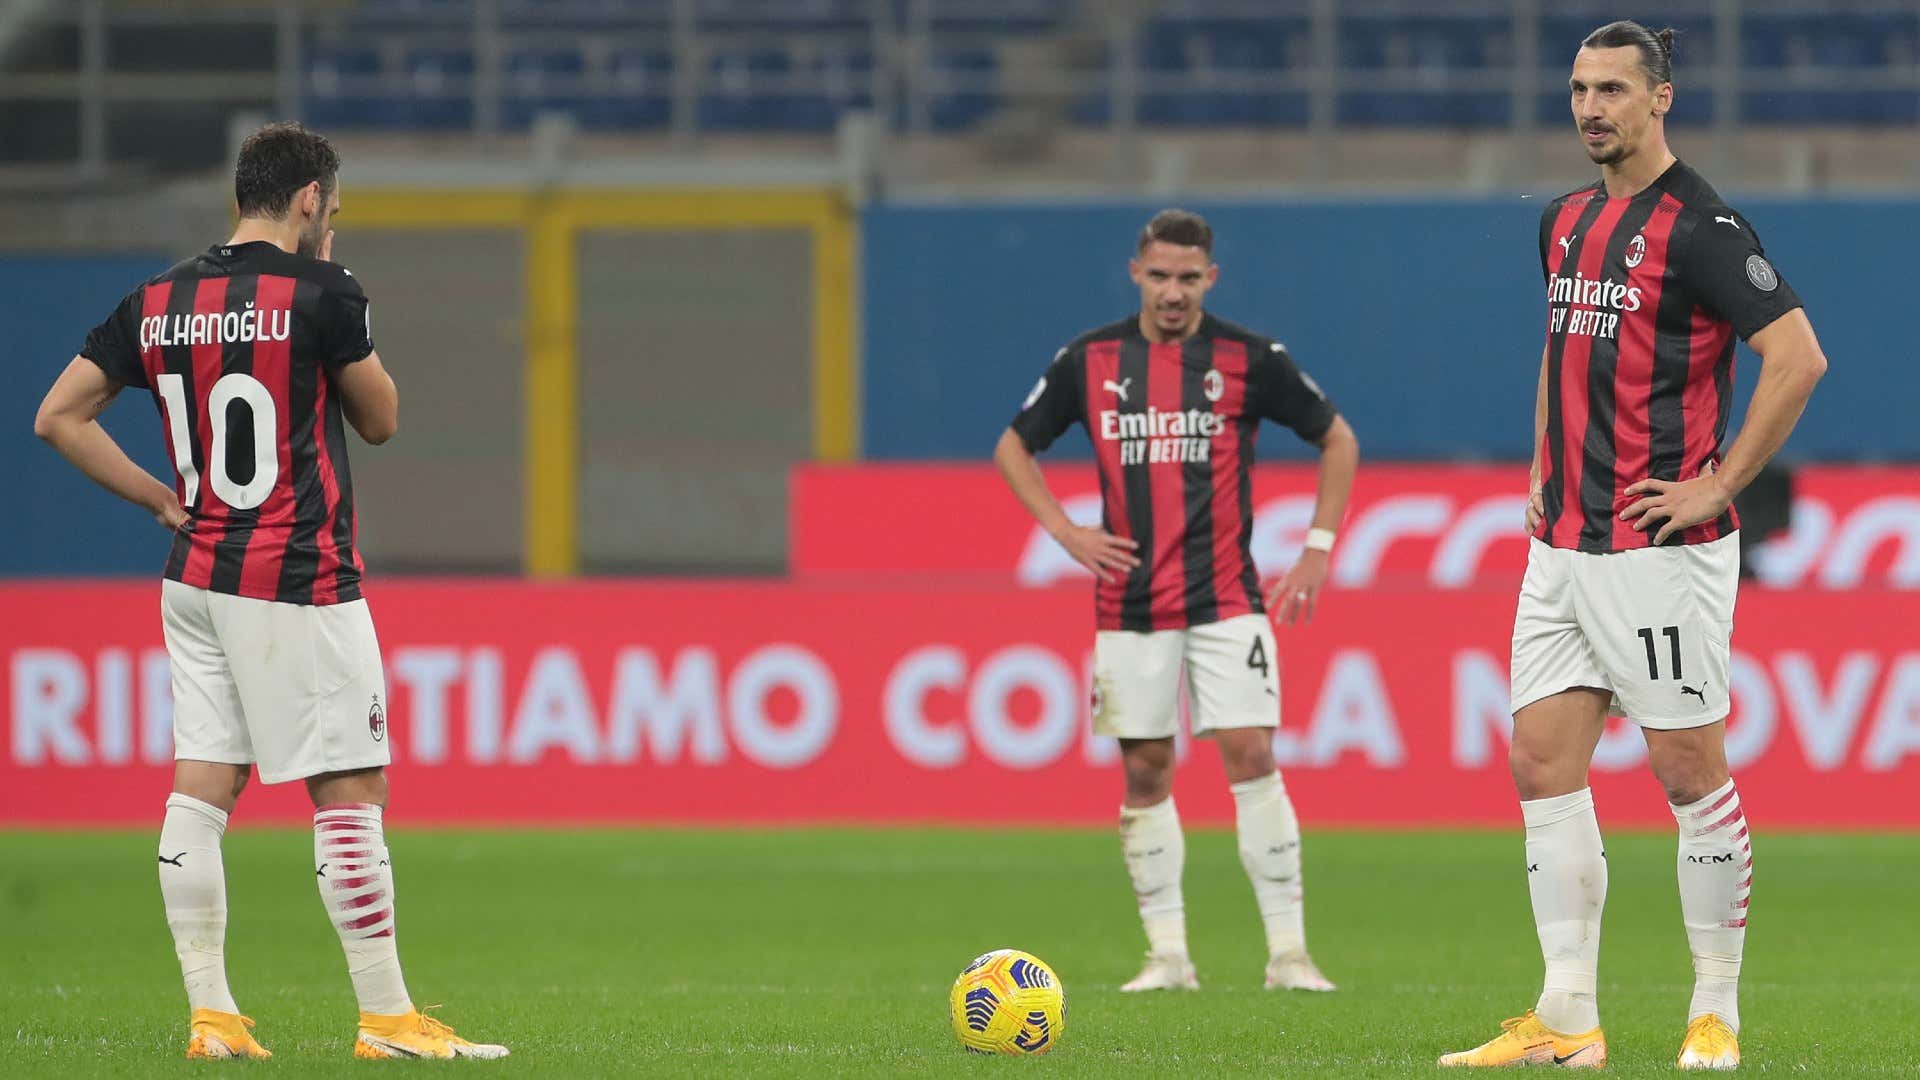 Ibrahimovic Calhanoglu - Milan Verona